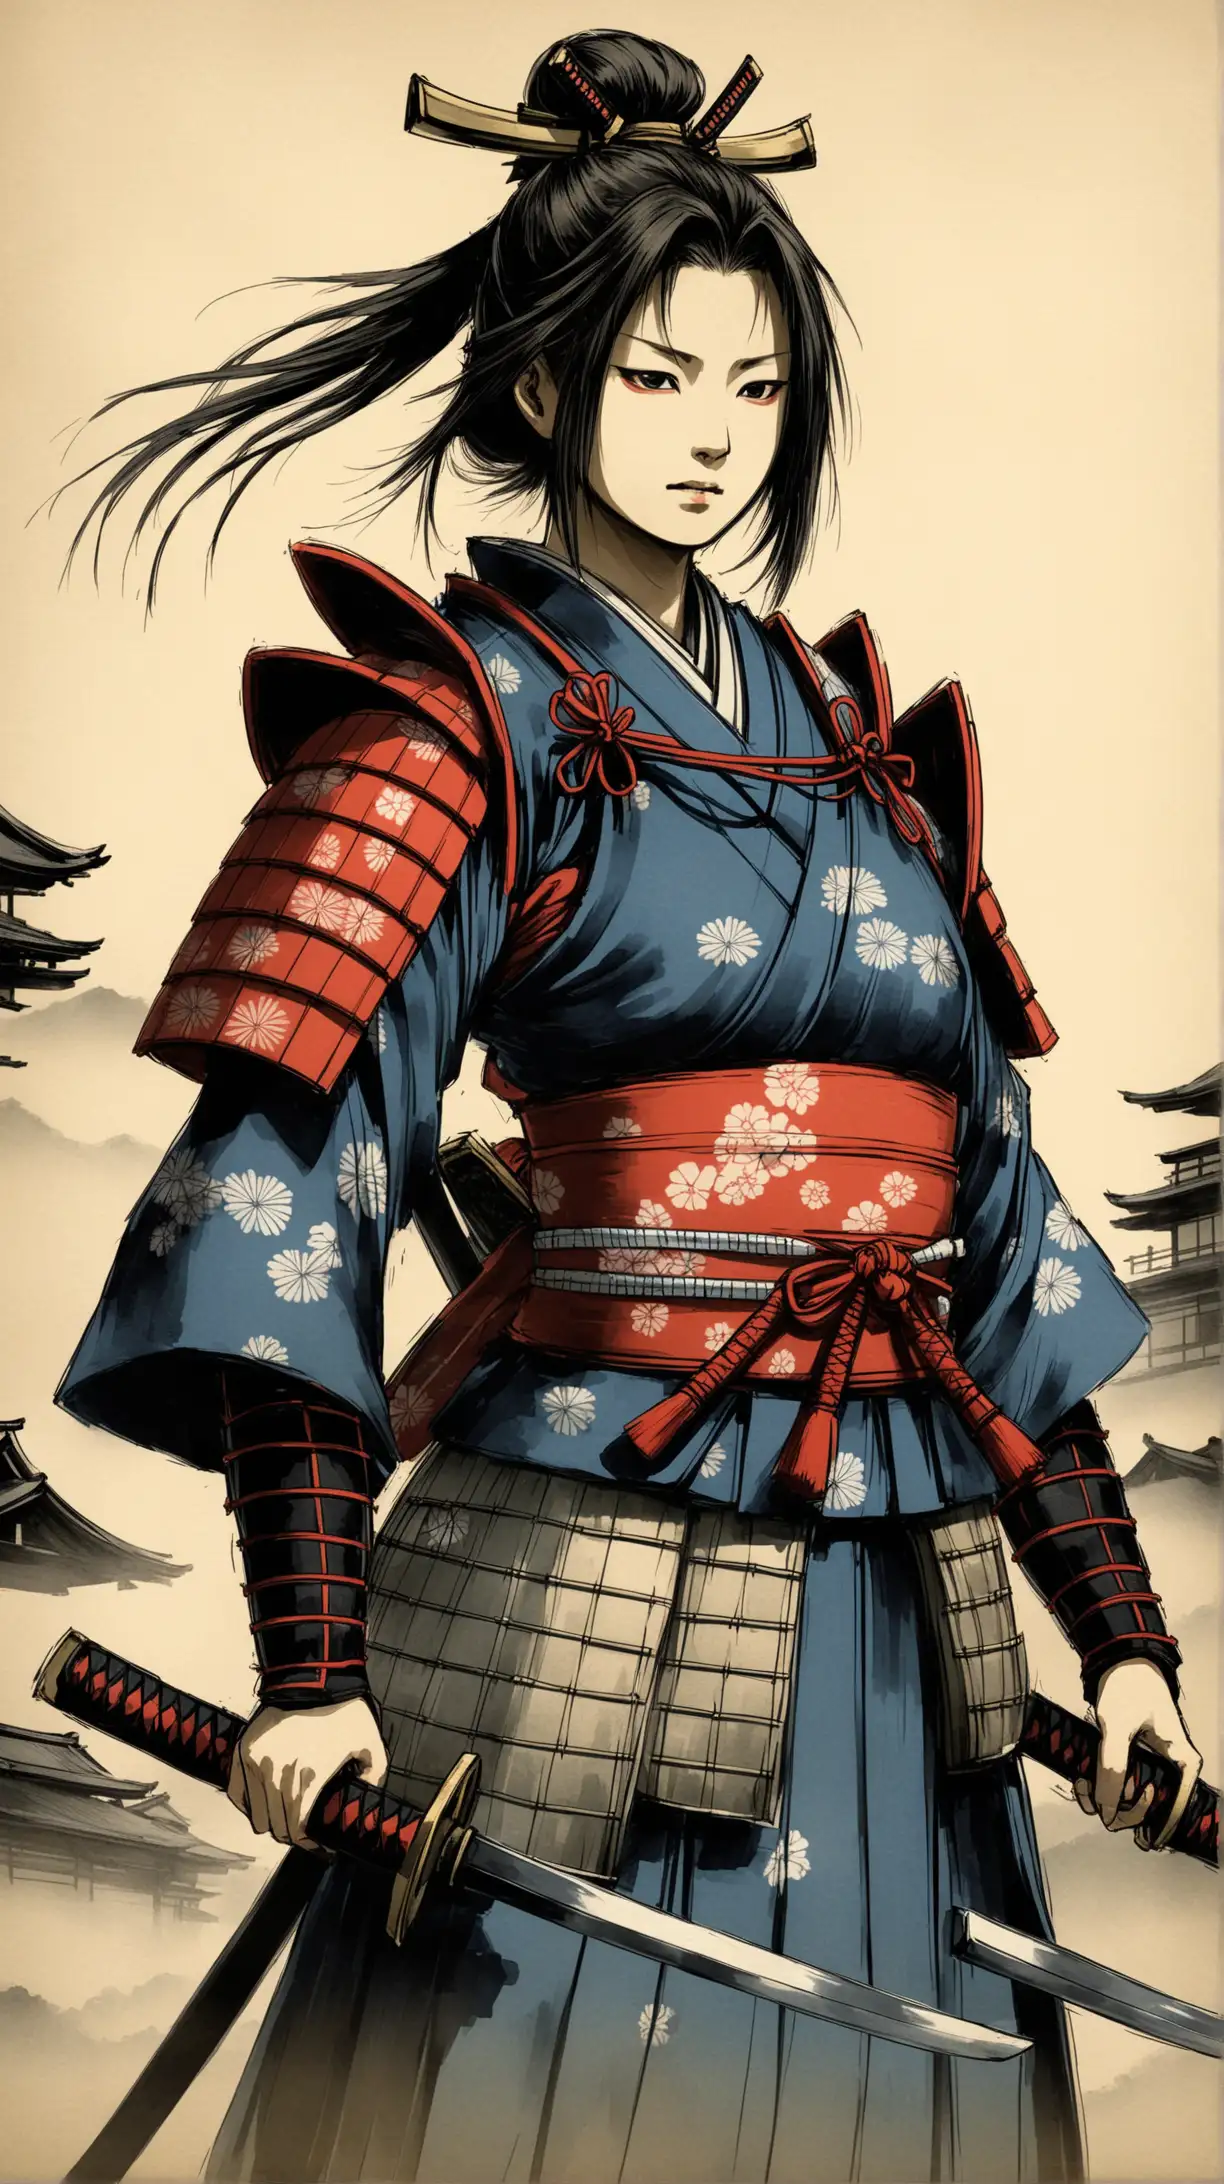 Female samurai in feudal japan